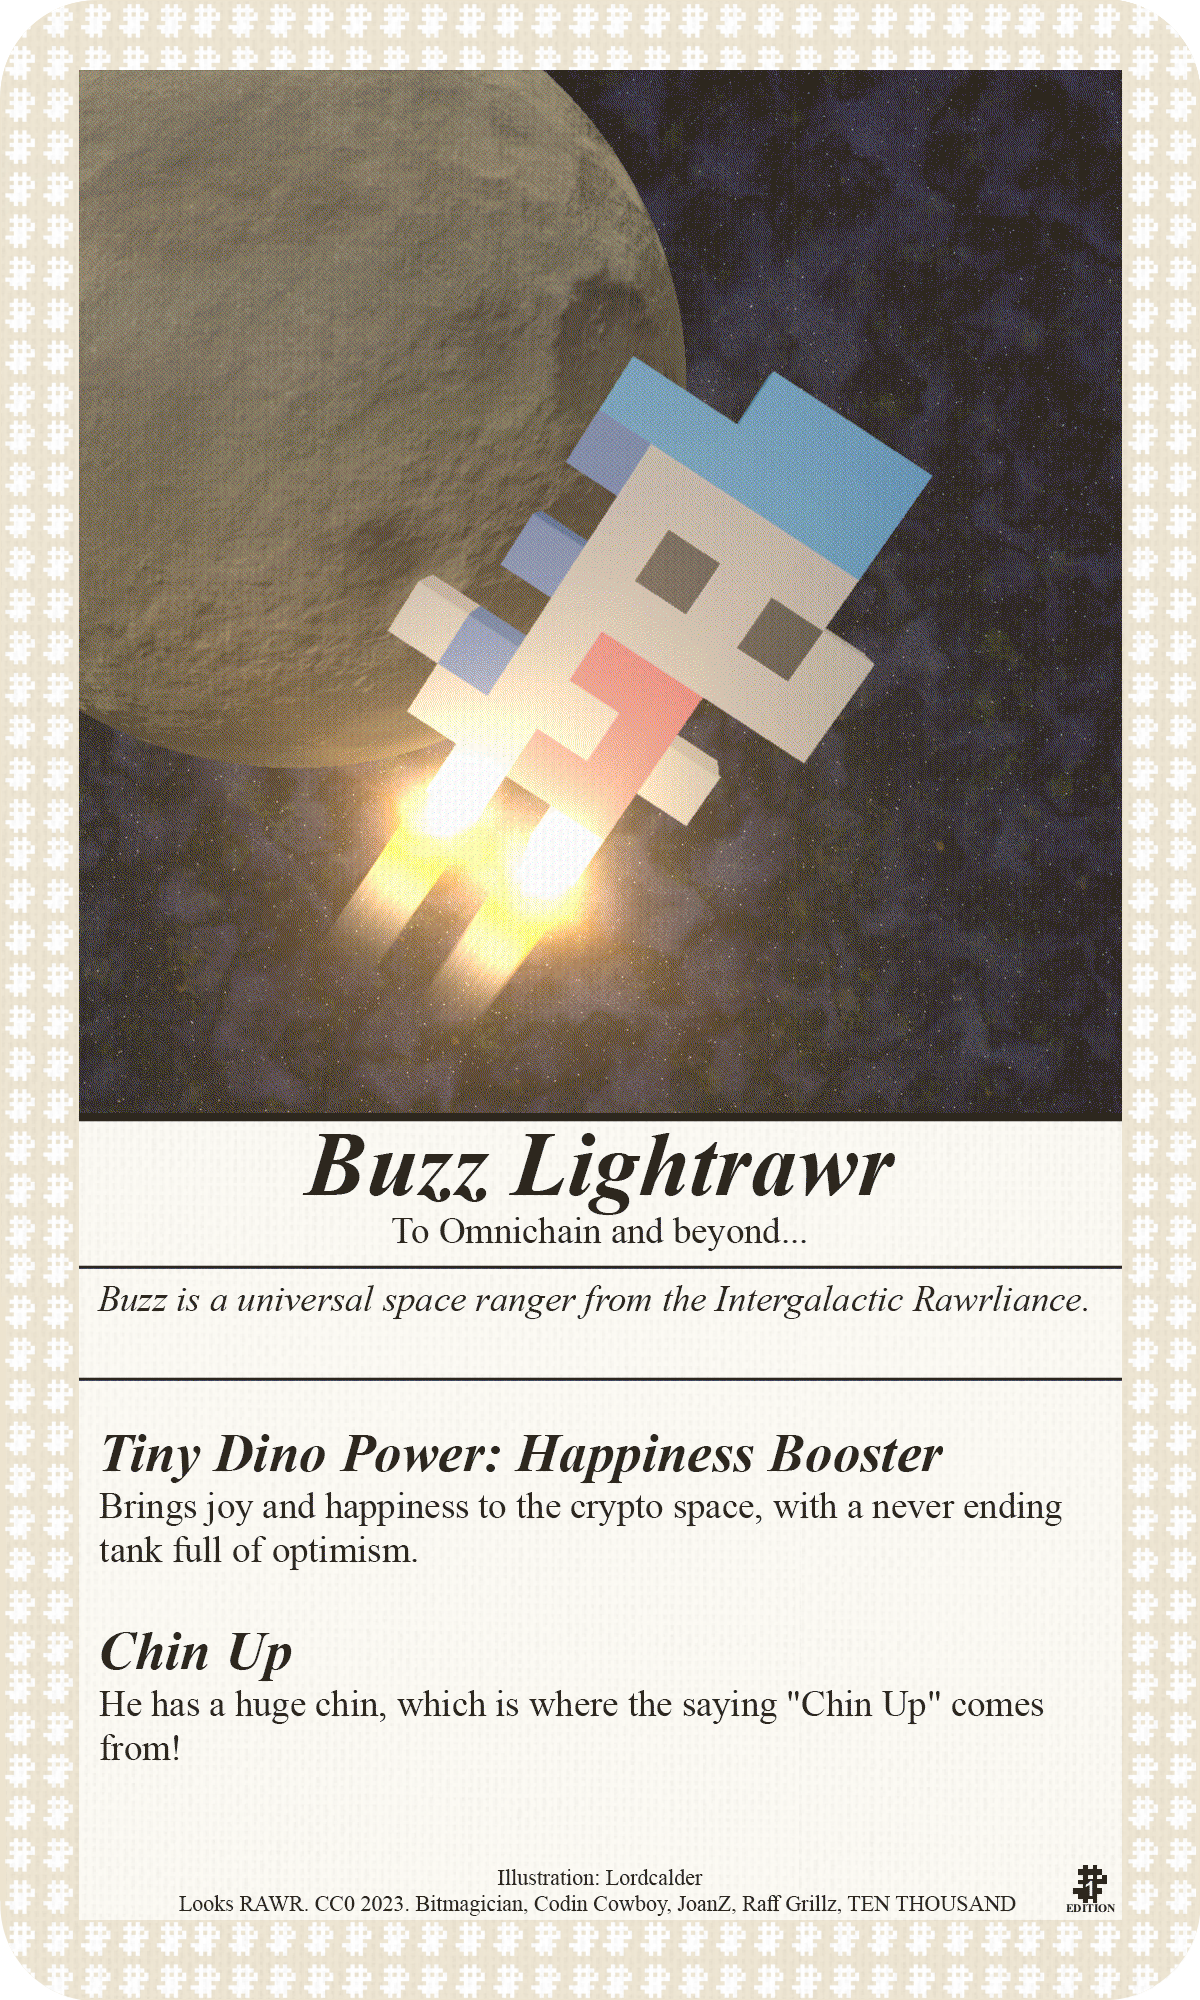 Buzz Lightrawr